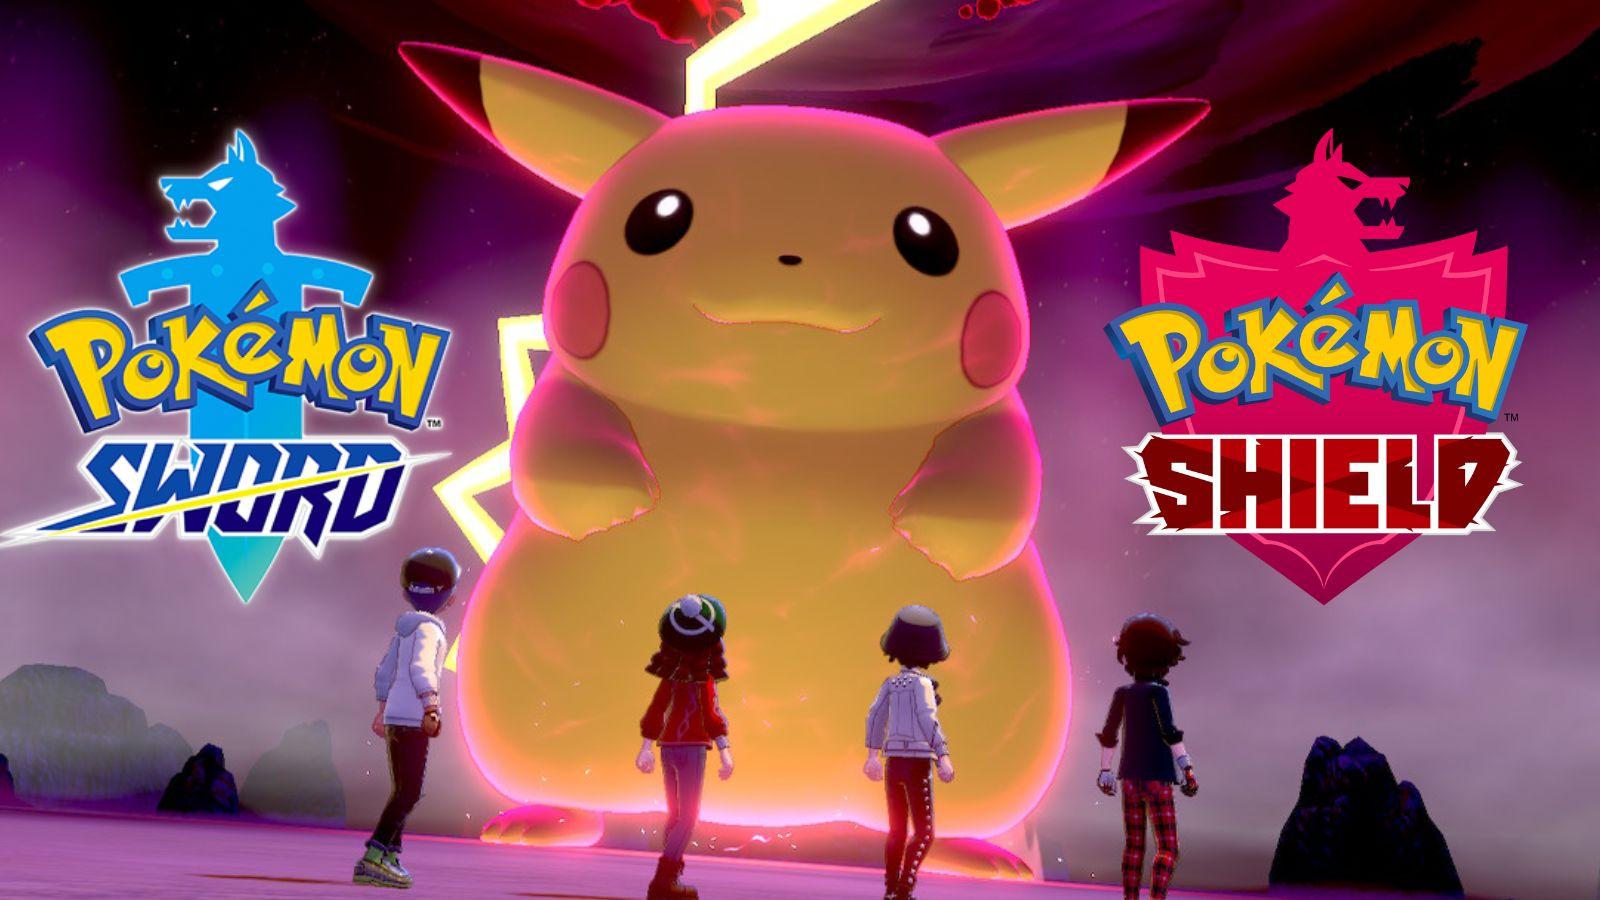 Pokémon Sword And Shield 'Battle of Legends' Online Competition Announced